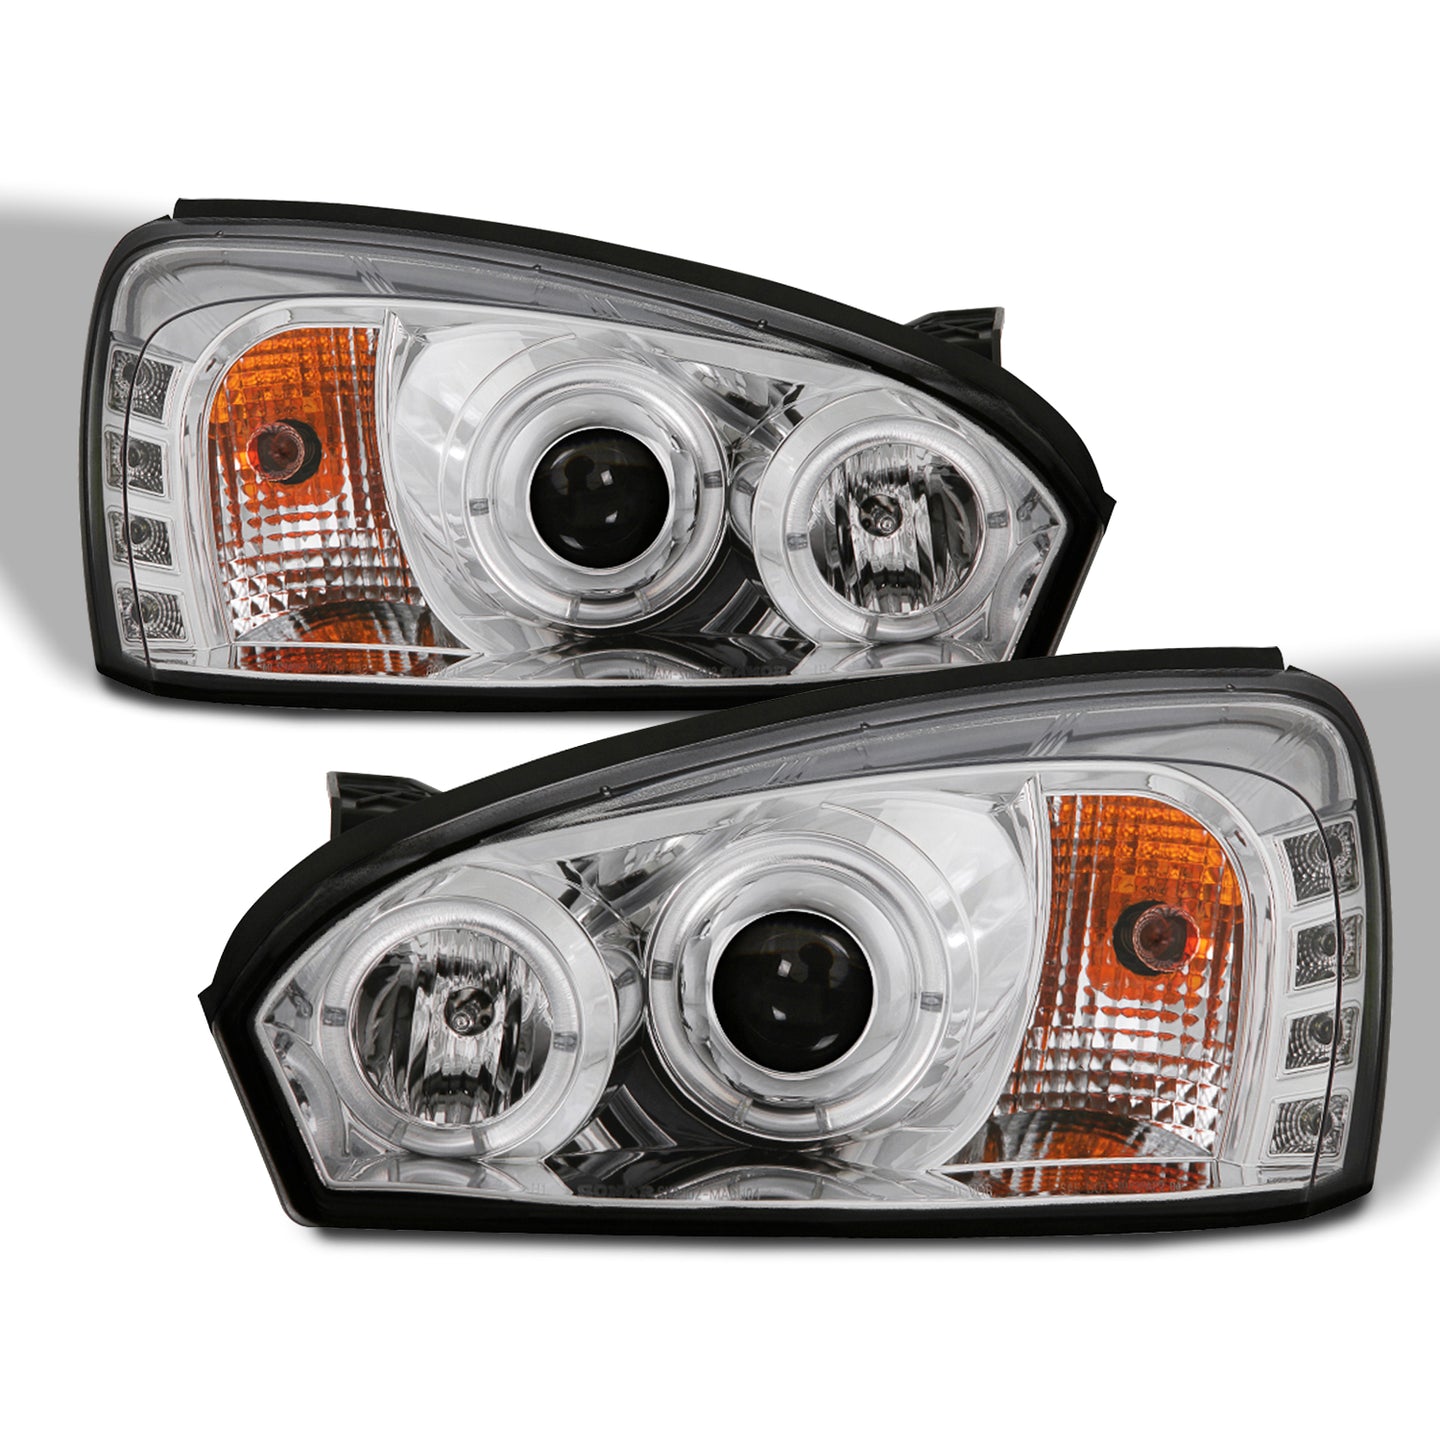 Modulo LED 9240 2835 3 focos LED Blacklight  Amaterasu LED – Amaterasu  Iluminacion Led